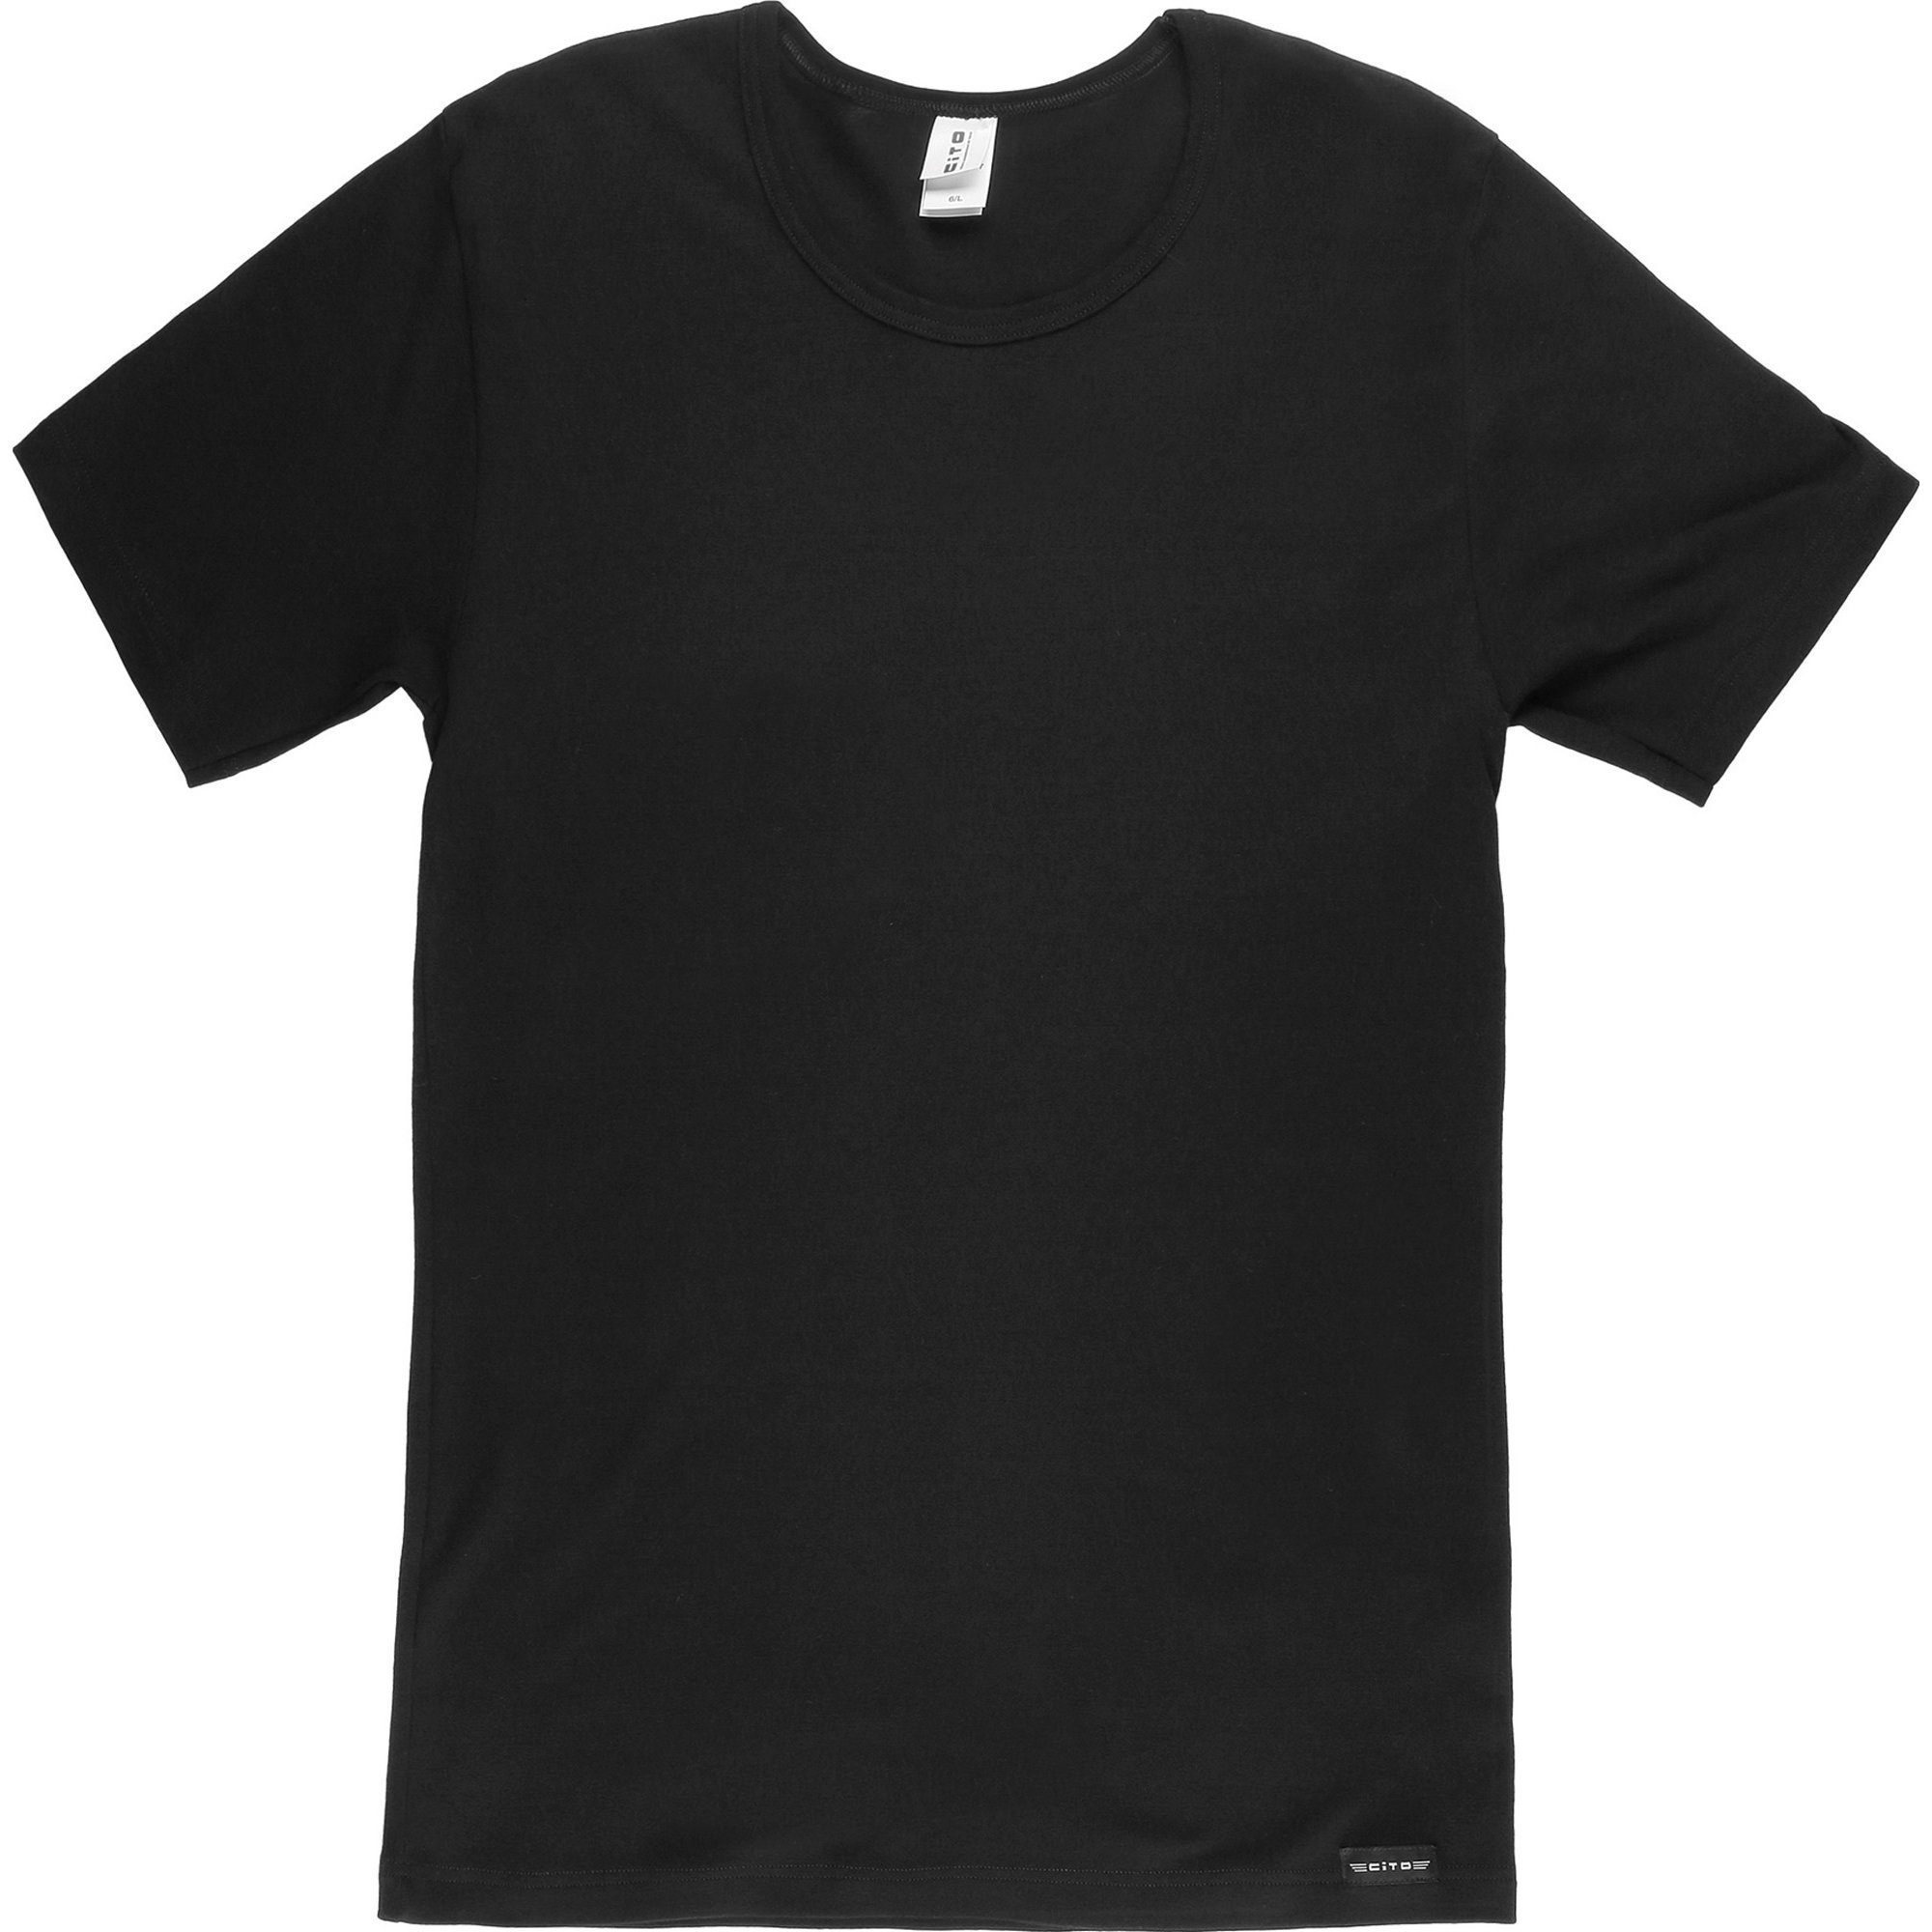 Cito Uni 1/2-Arm Feinripp schwarz T-Shirt 2er-Pack Herren-Unterhemd,